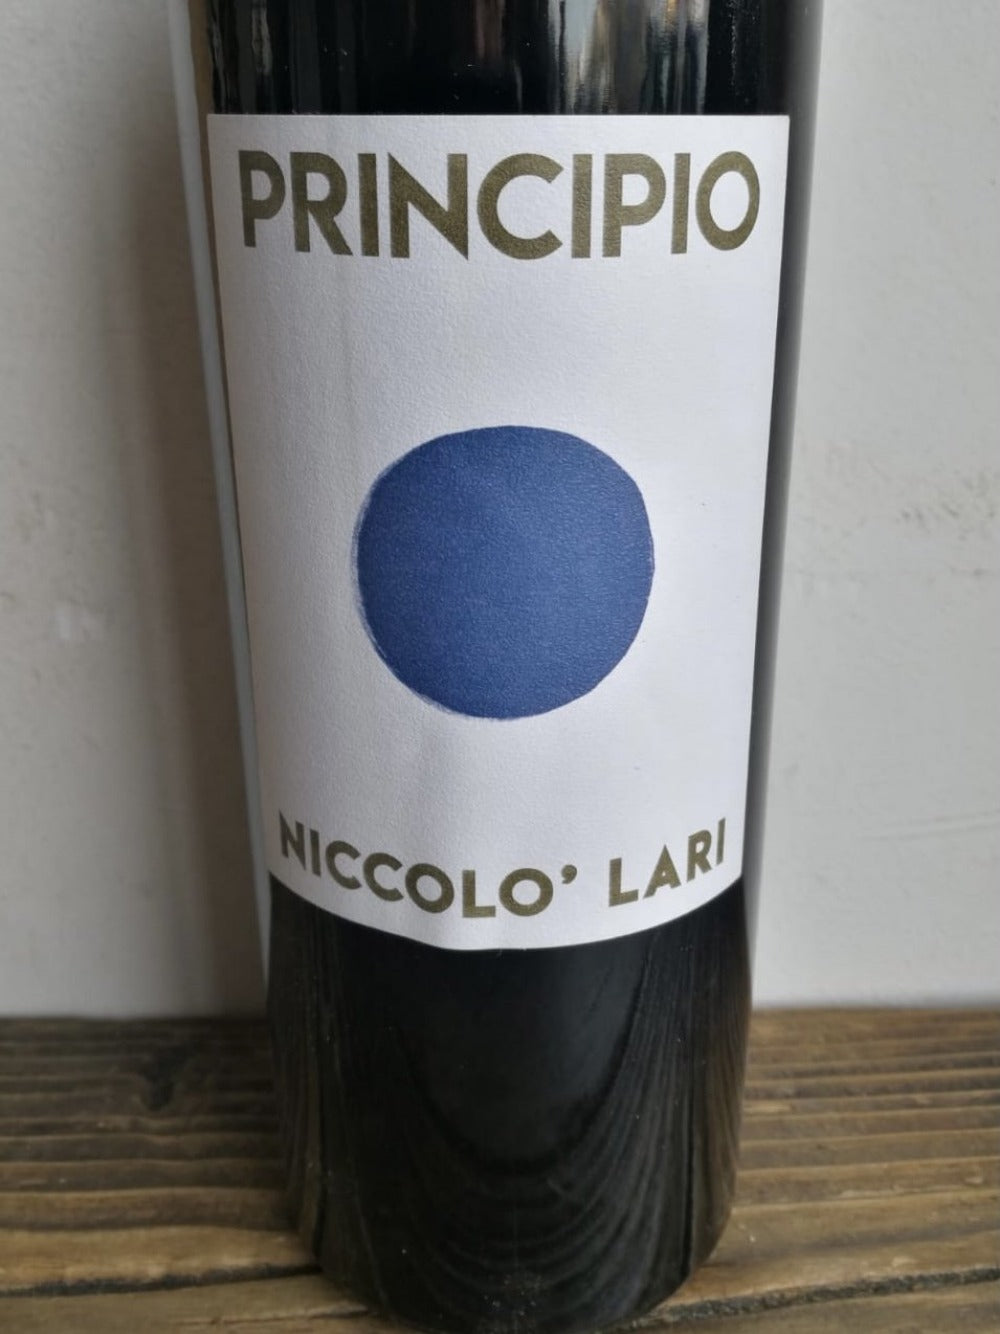 Principio - Niccolò Lari 